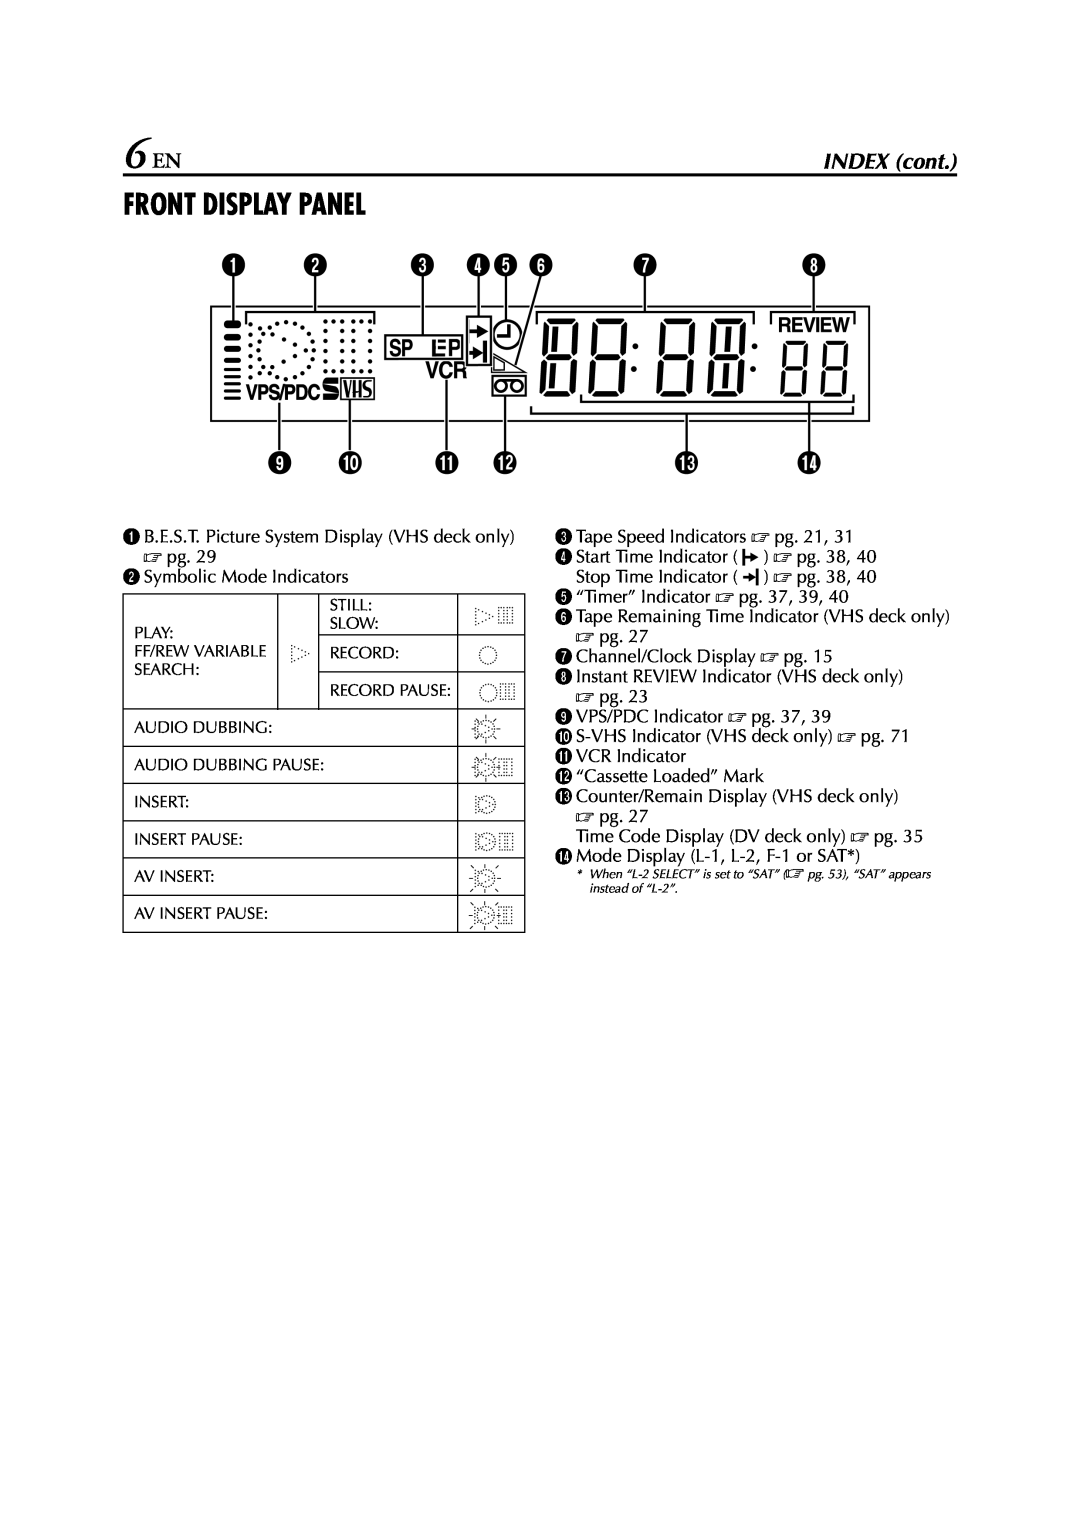 JVC LPT0616-001A specifications 6 EN, Front Display Panel, INDEX cont 